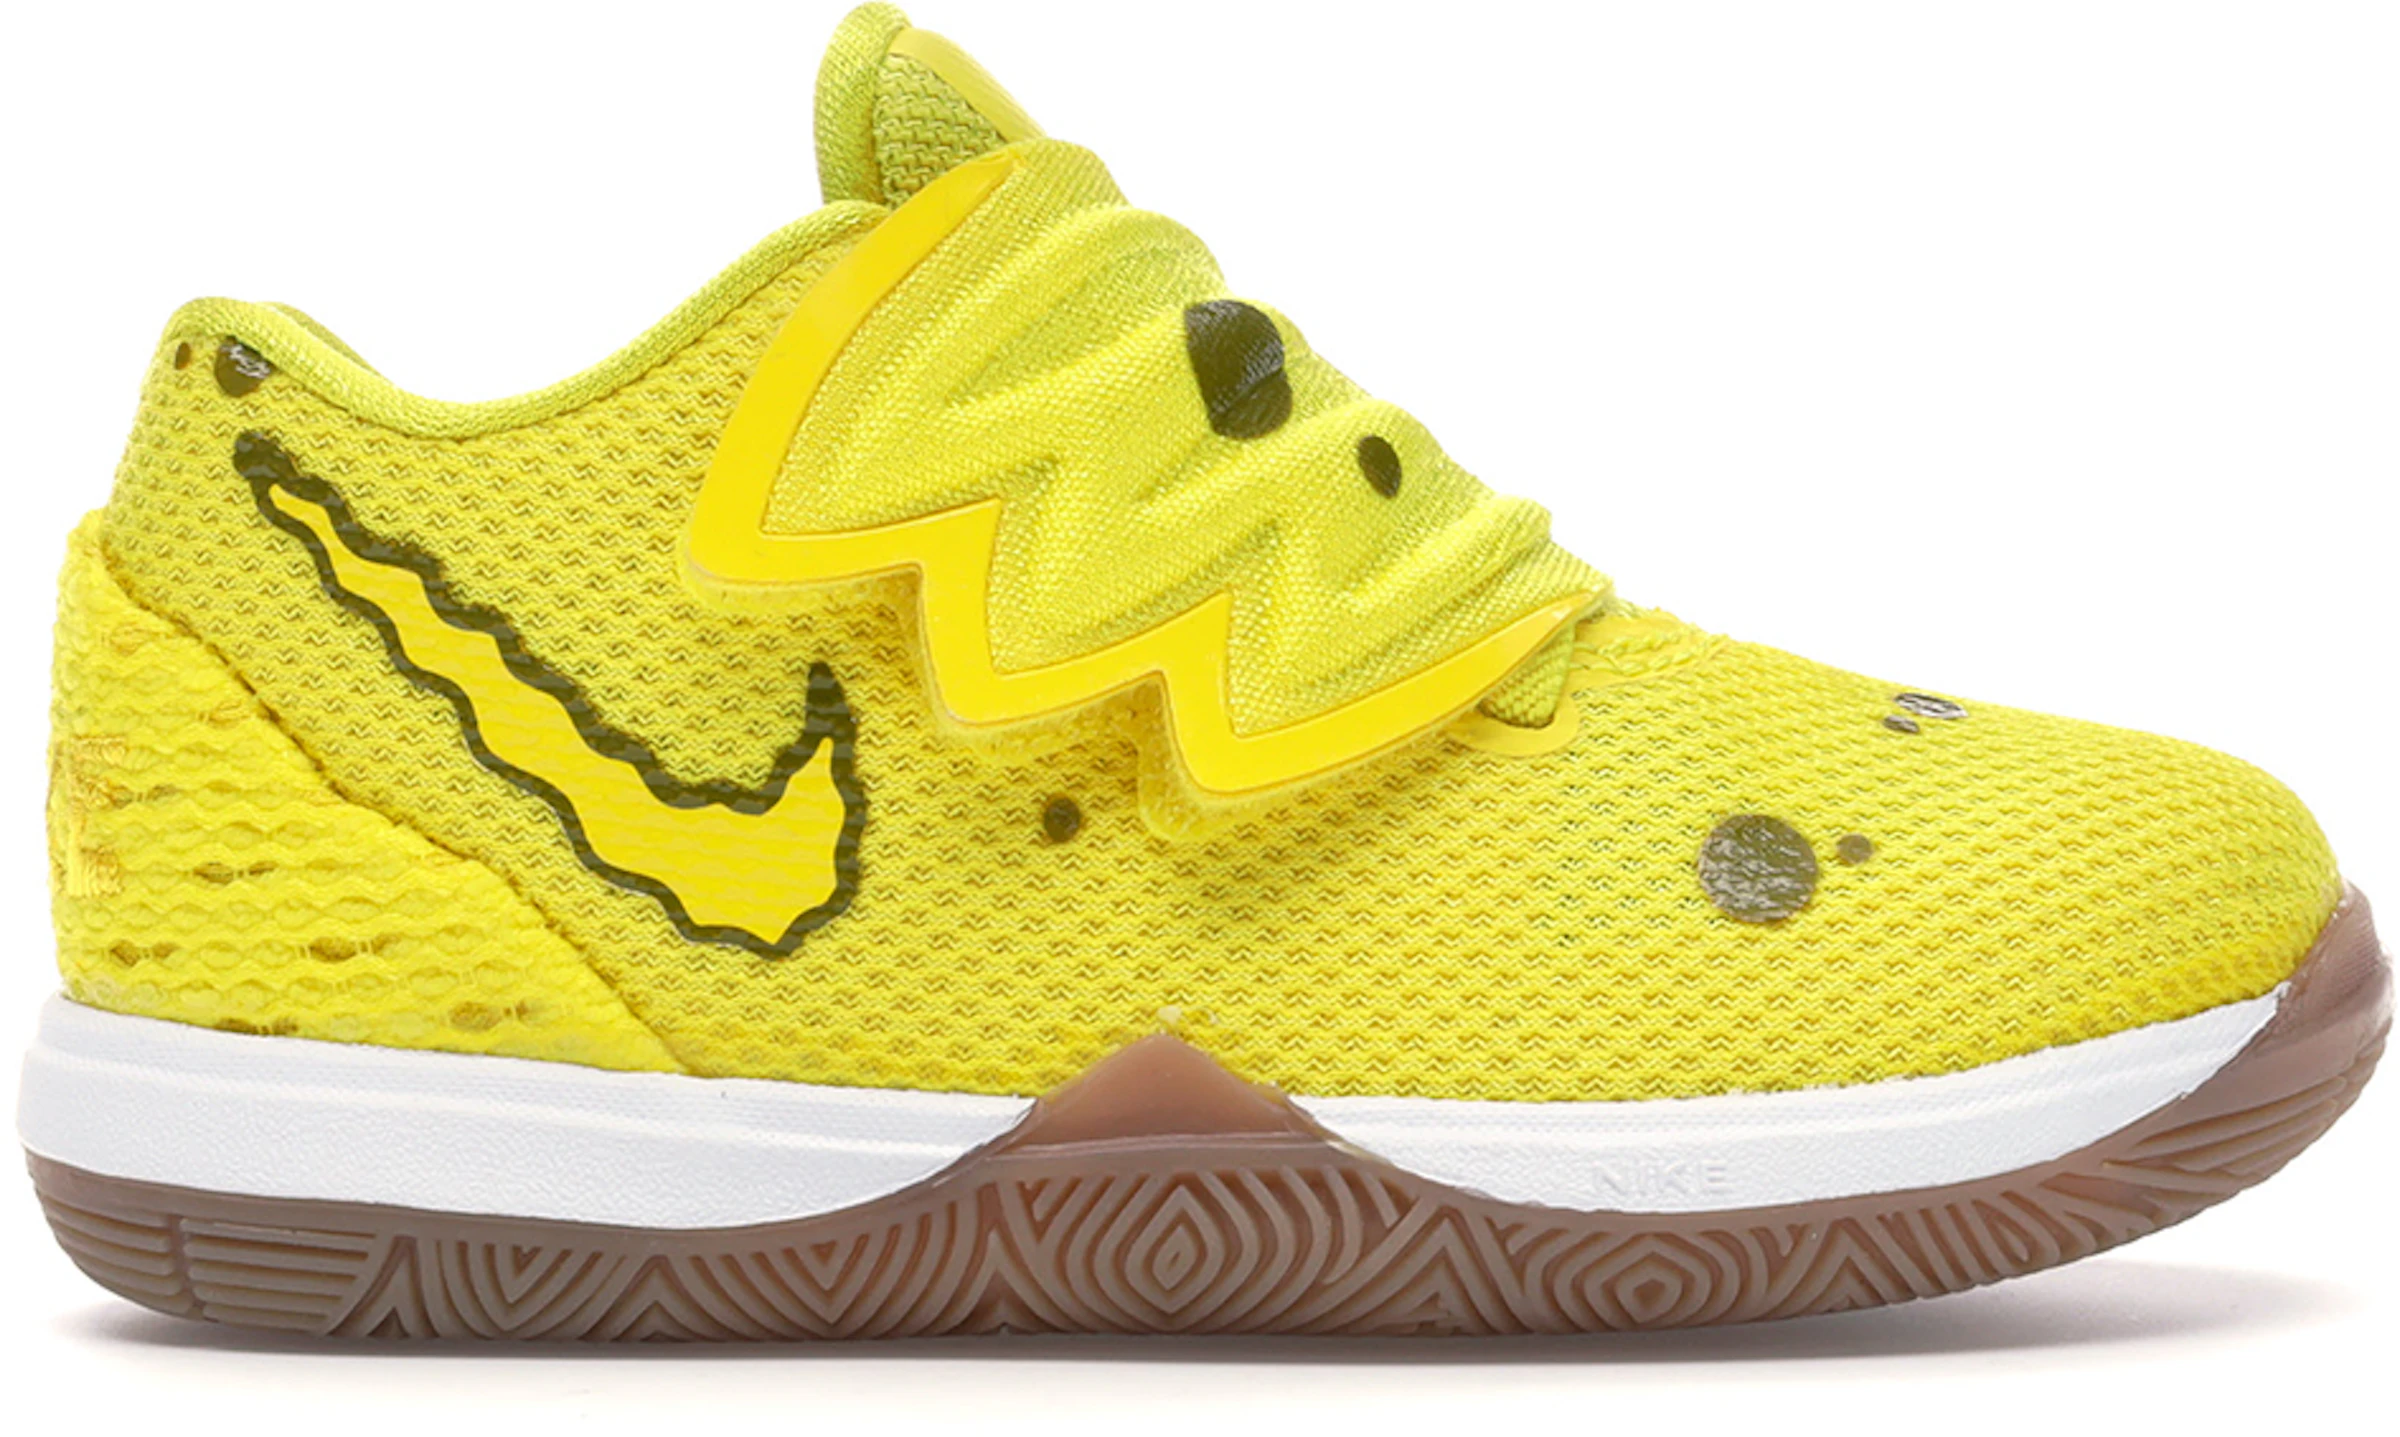 Buy Nike Basketball Spongebob Shoes & New Sneakers - StockX